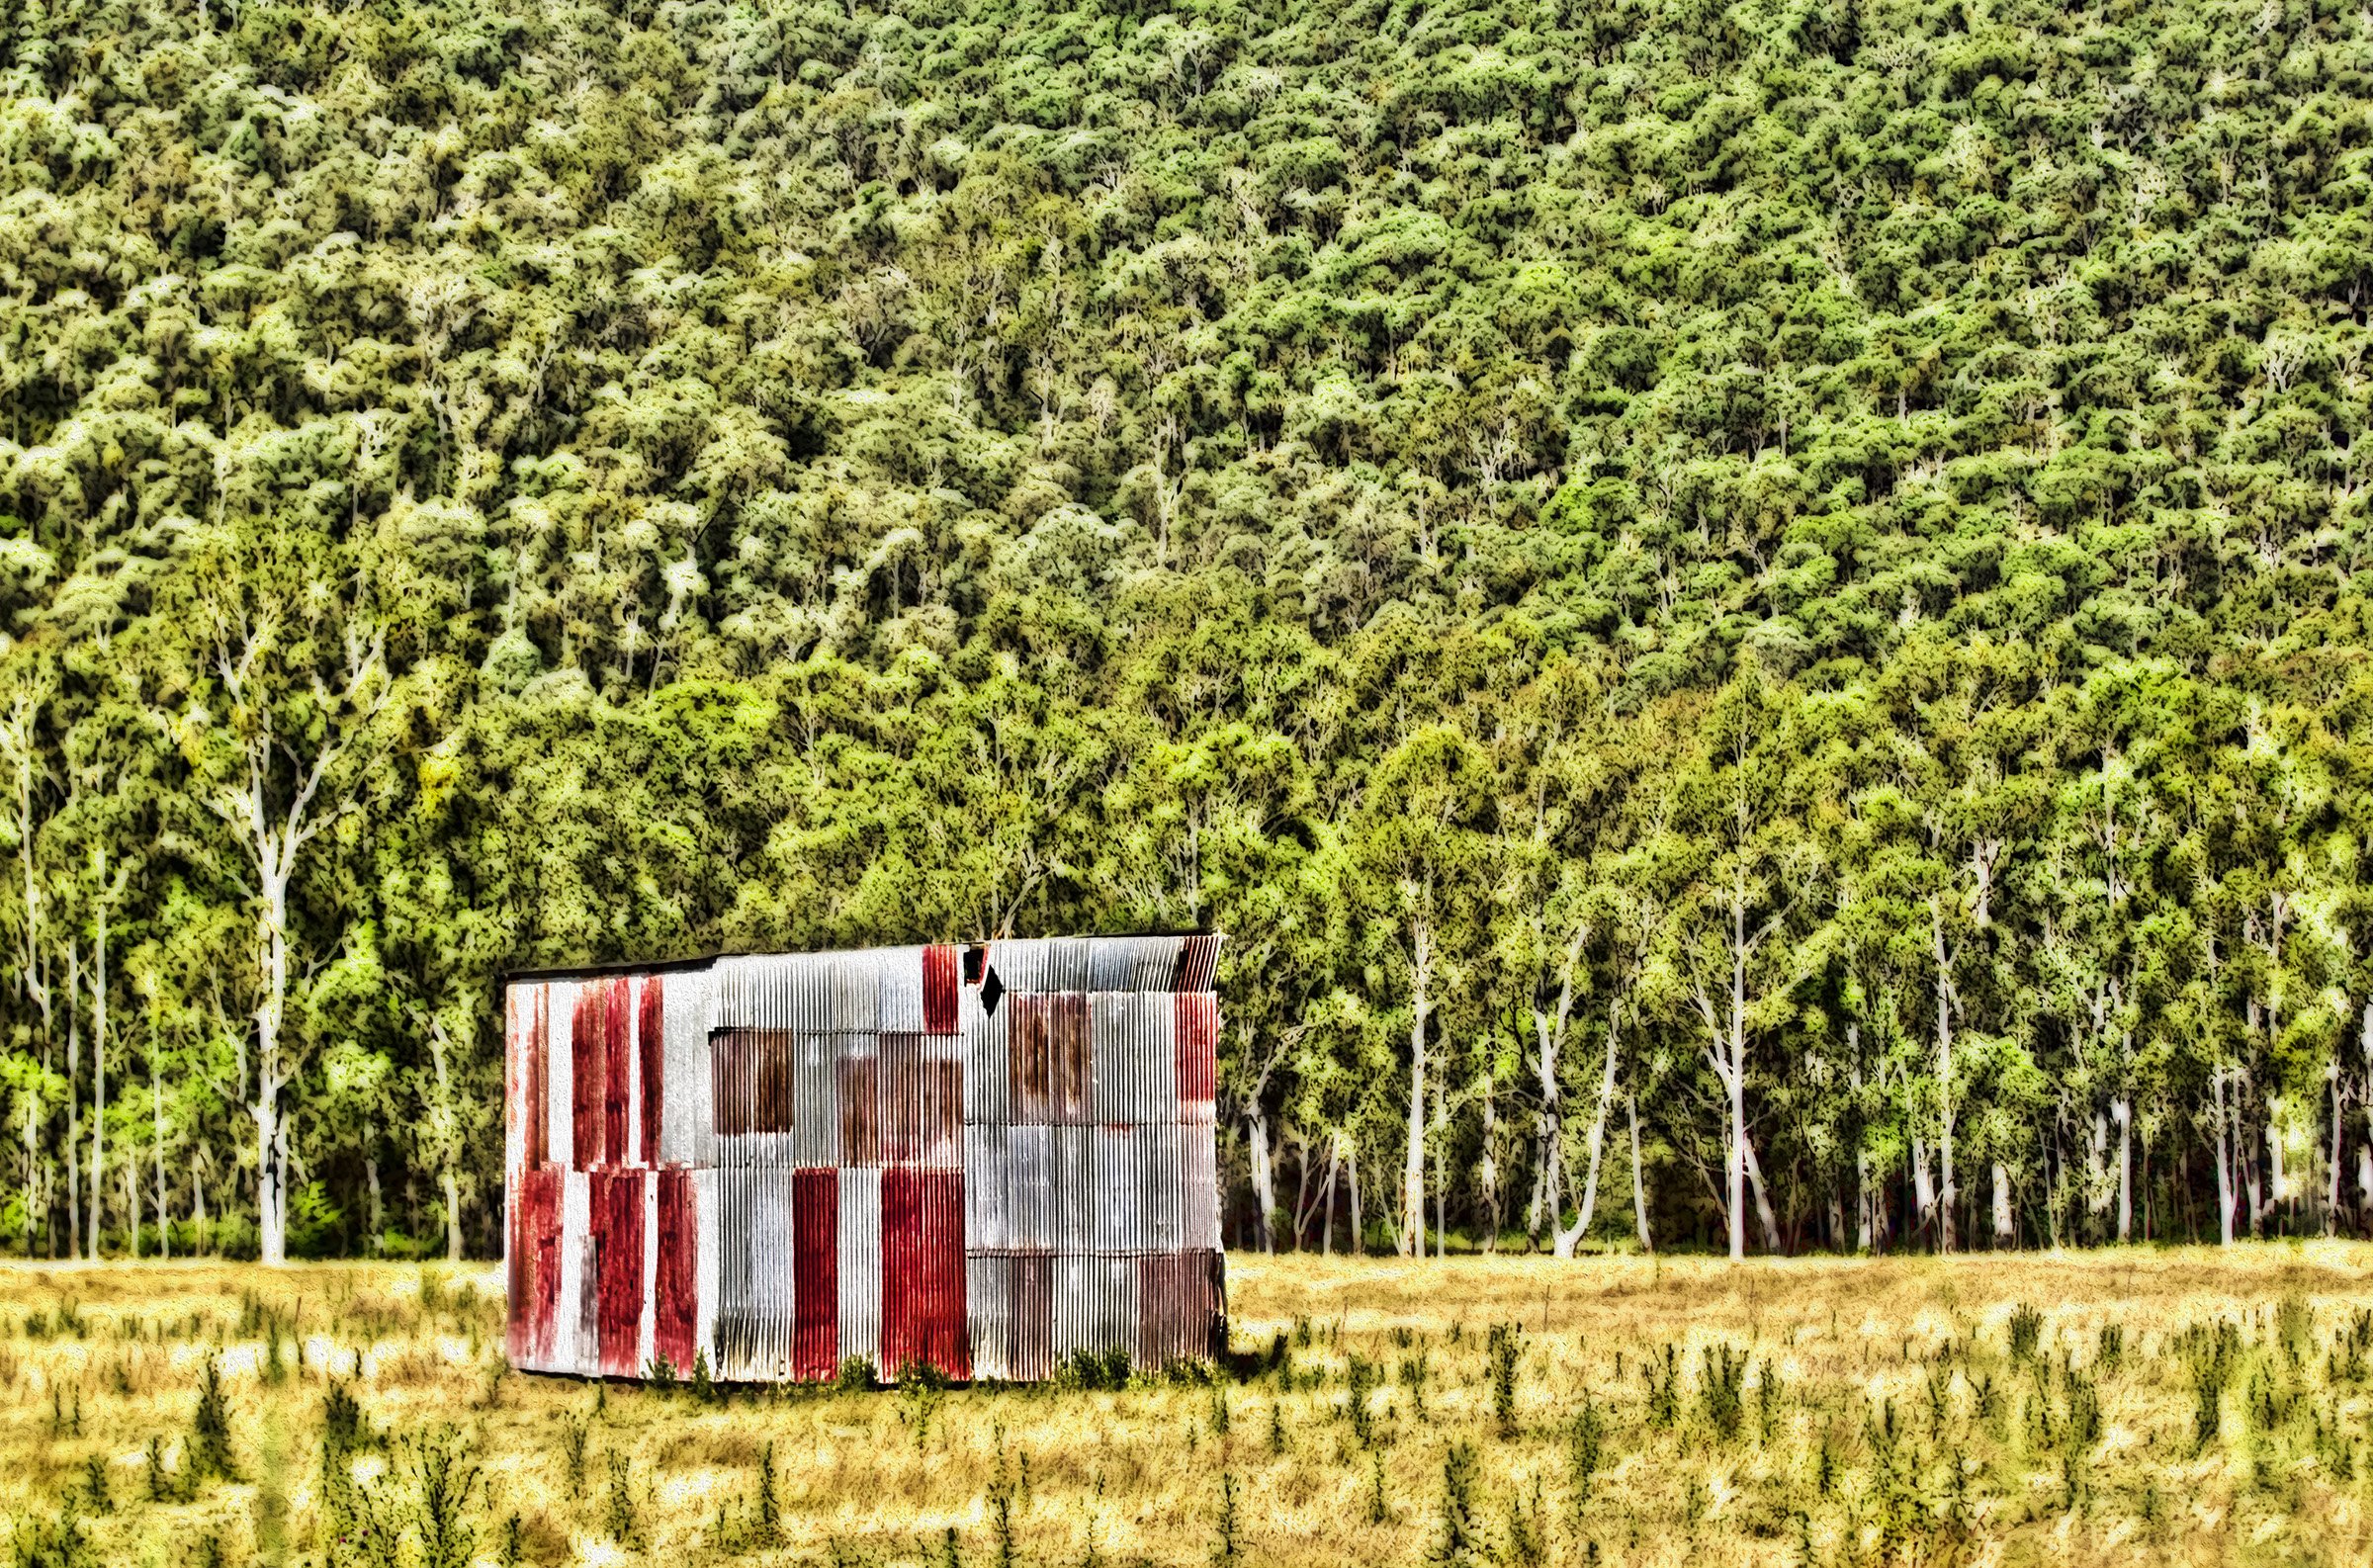 Corrugated vernacular tin shed